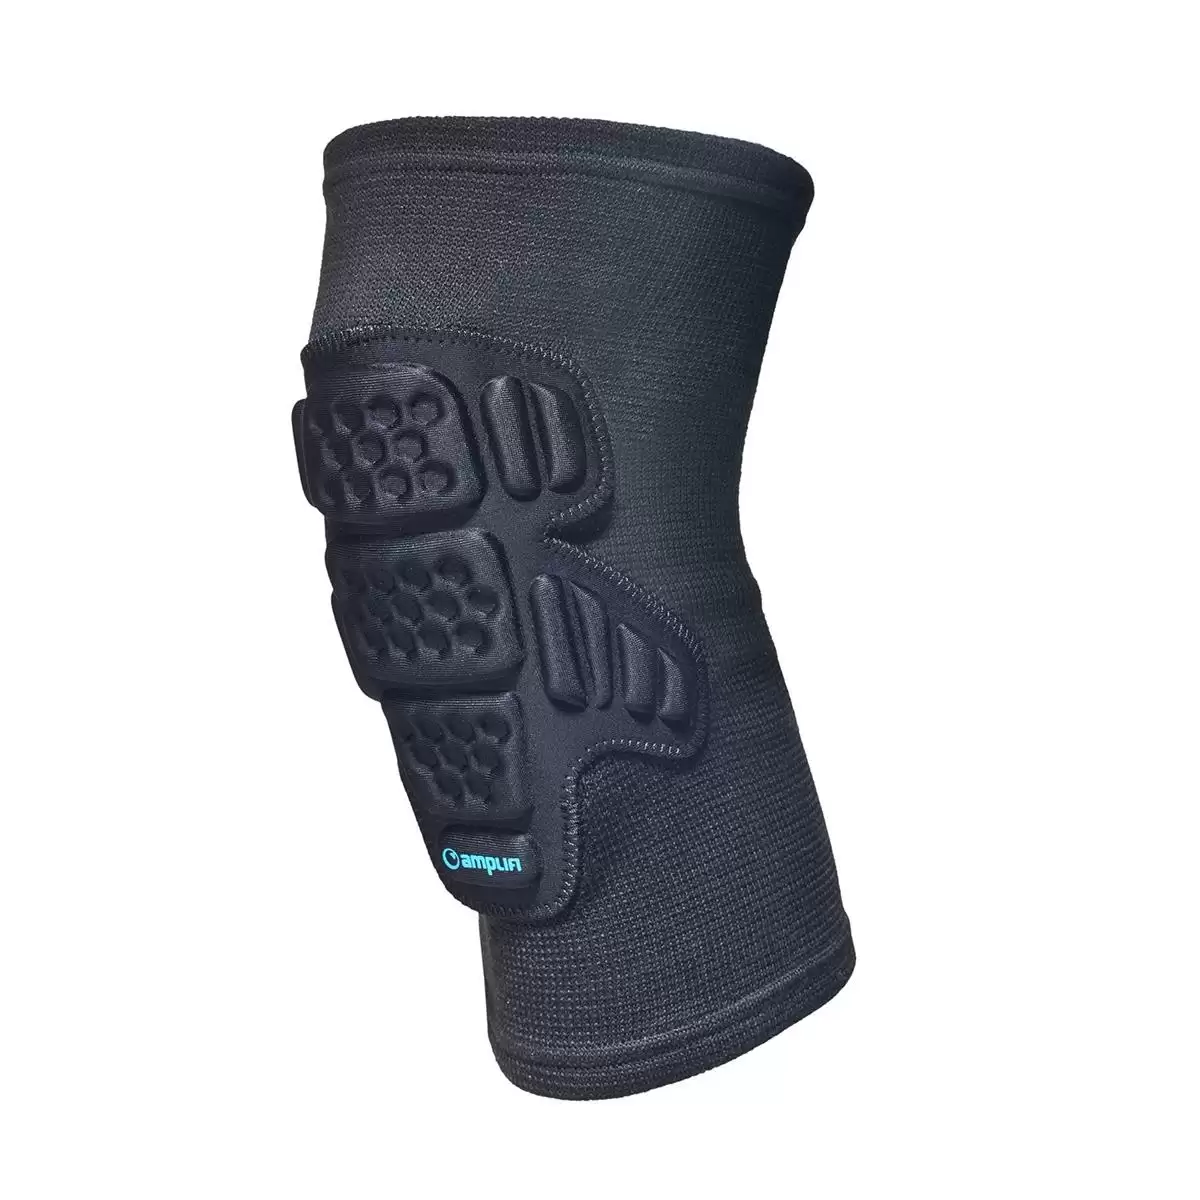 Sleeve 3D Knee guards Black Size M - image